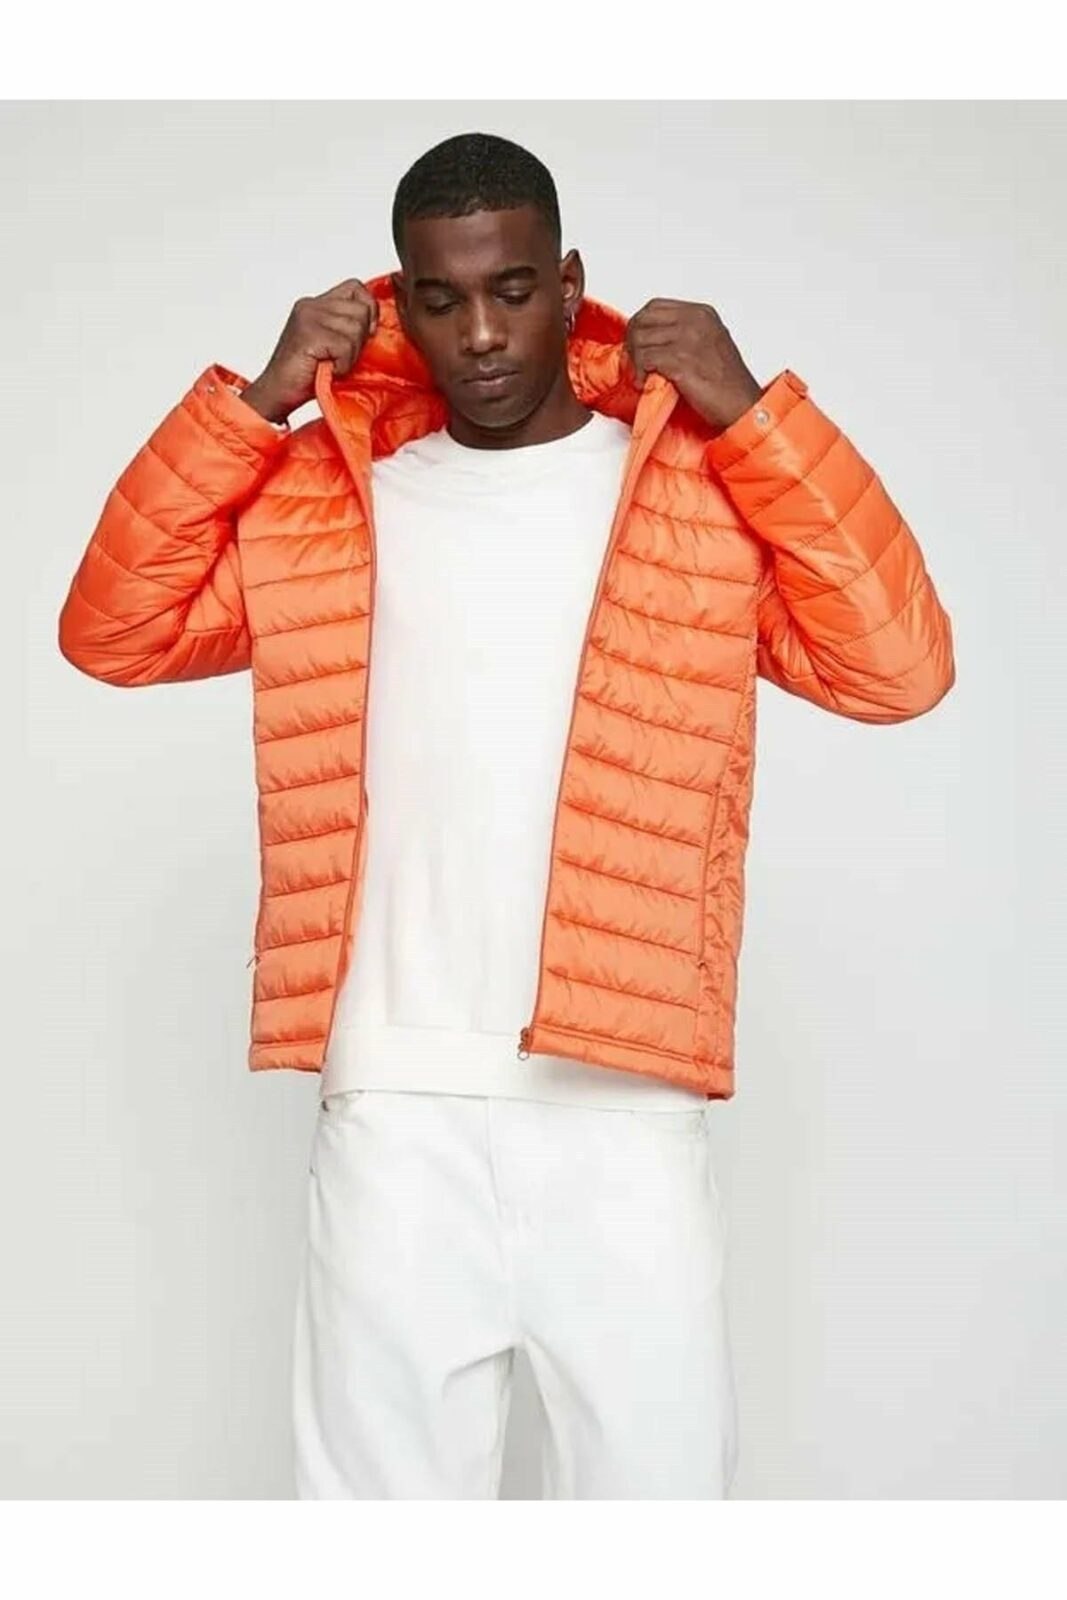 Koton Winter Jacket - Orange